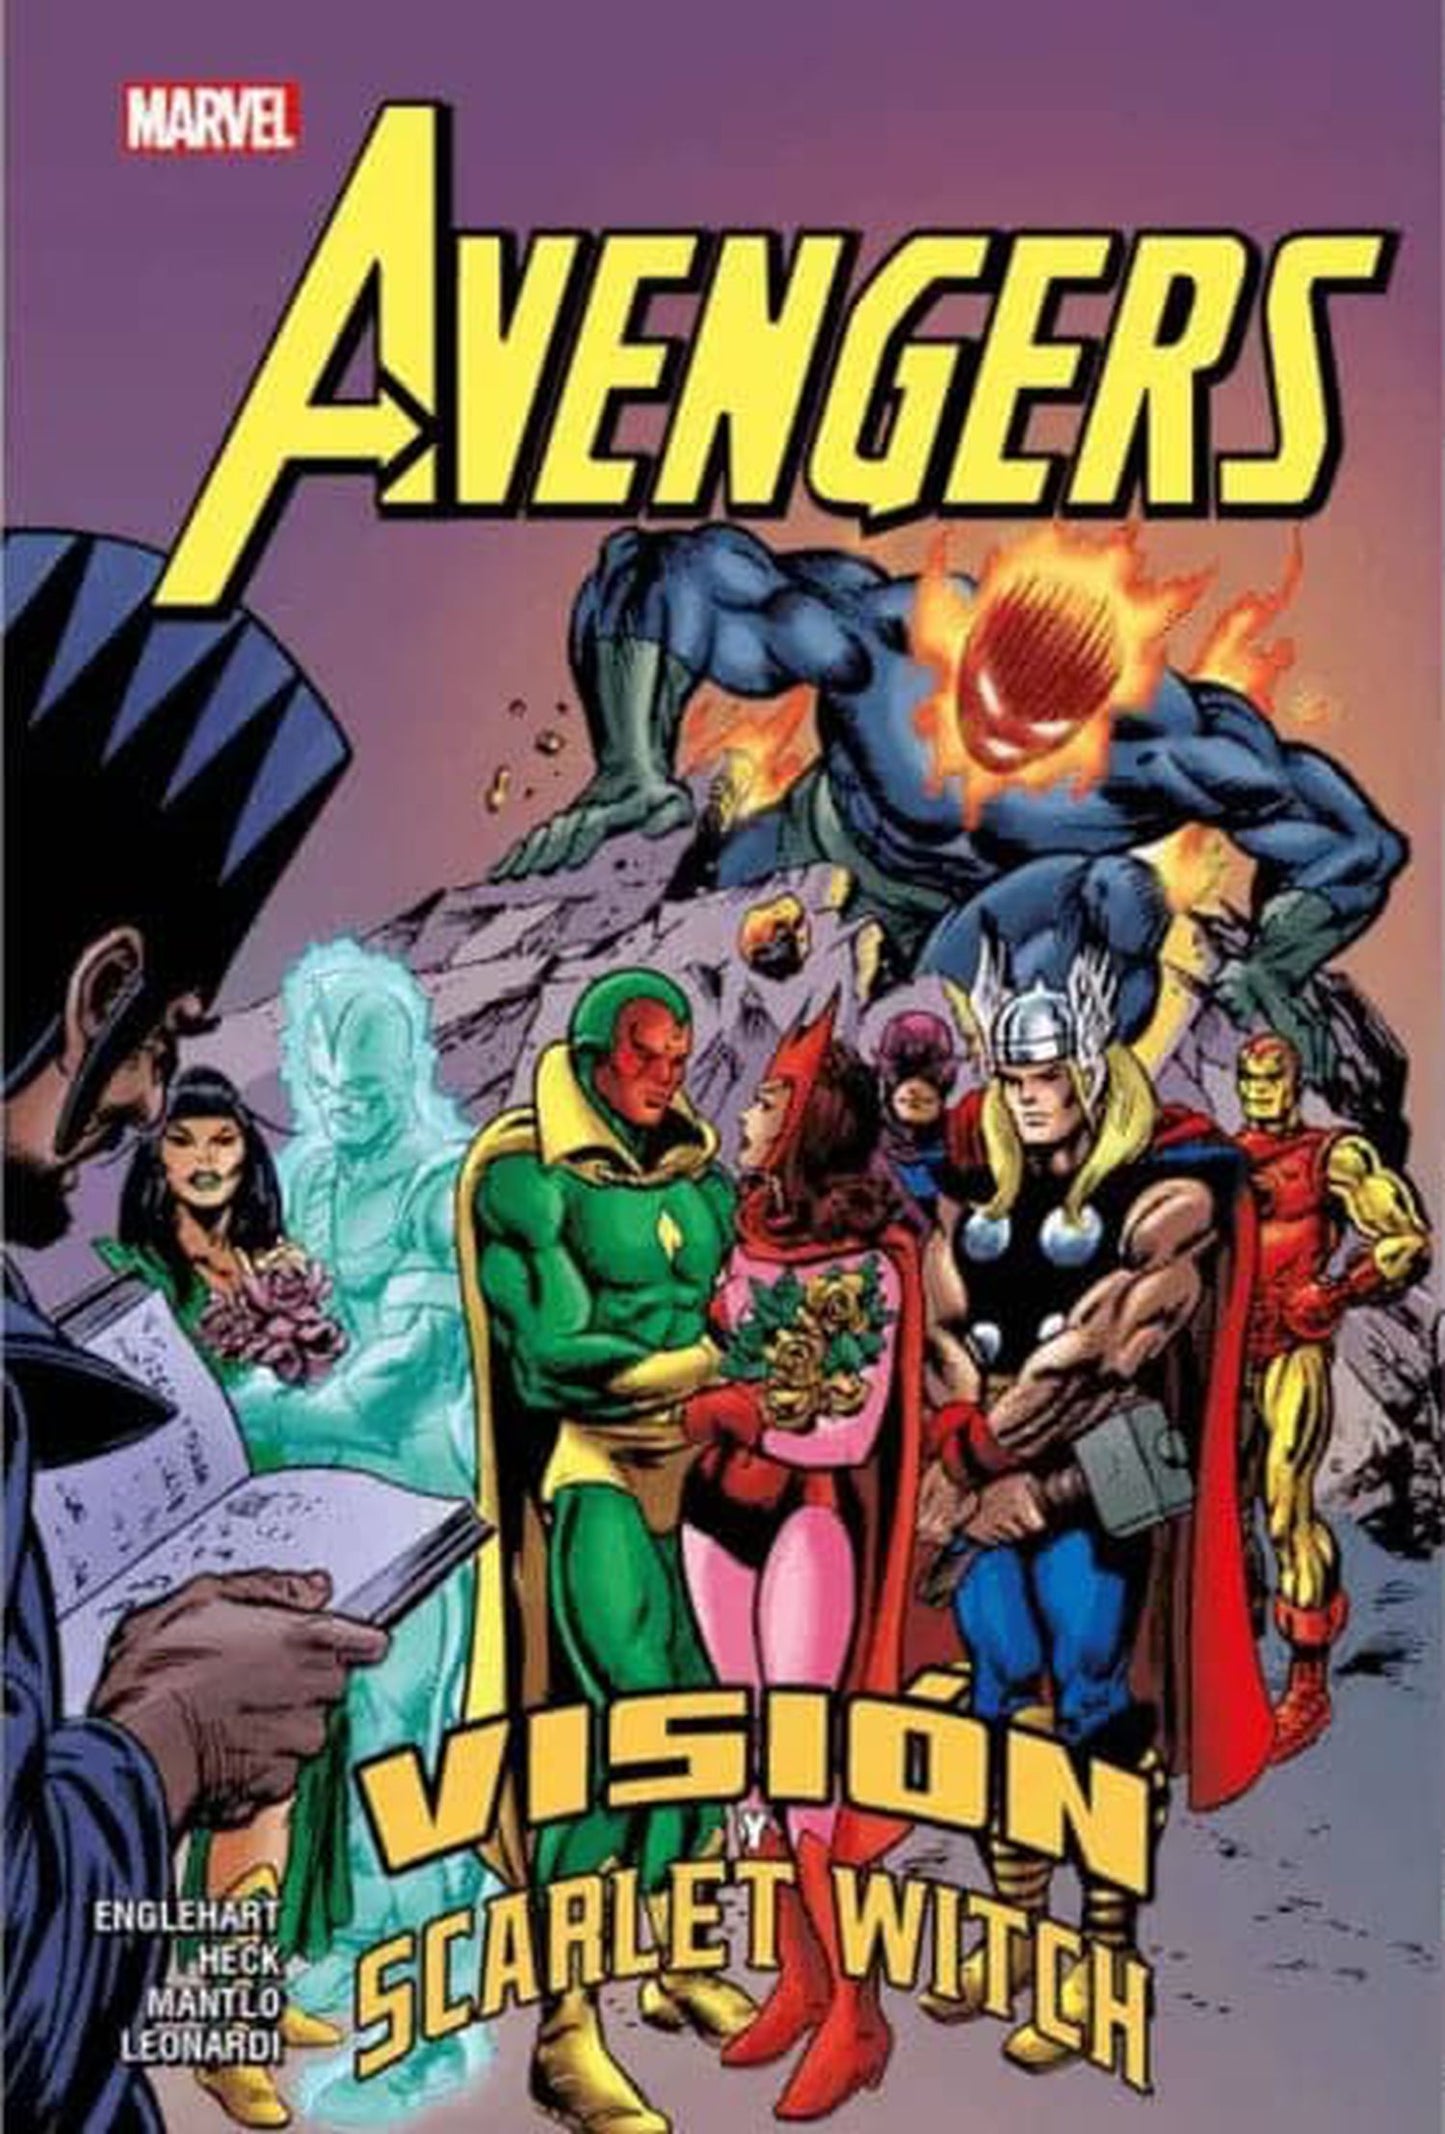 Avengers: Vision - Scarlet Witch Panini Argentina ENcuadrocomics